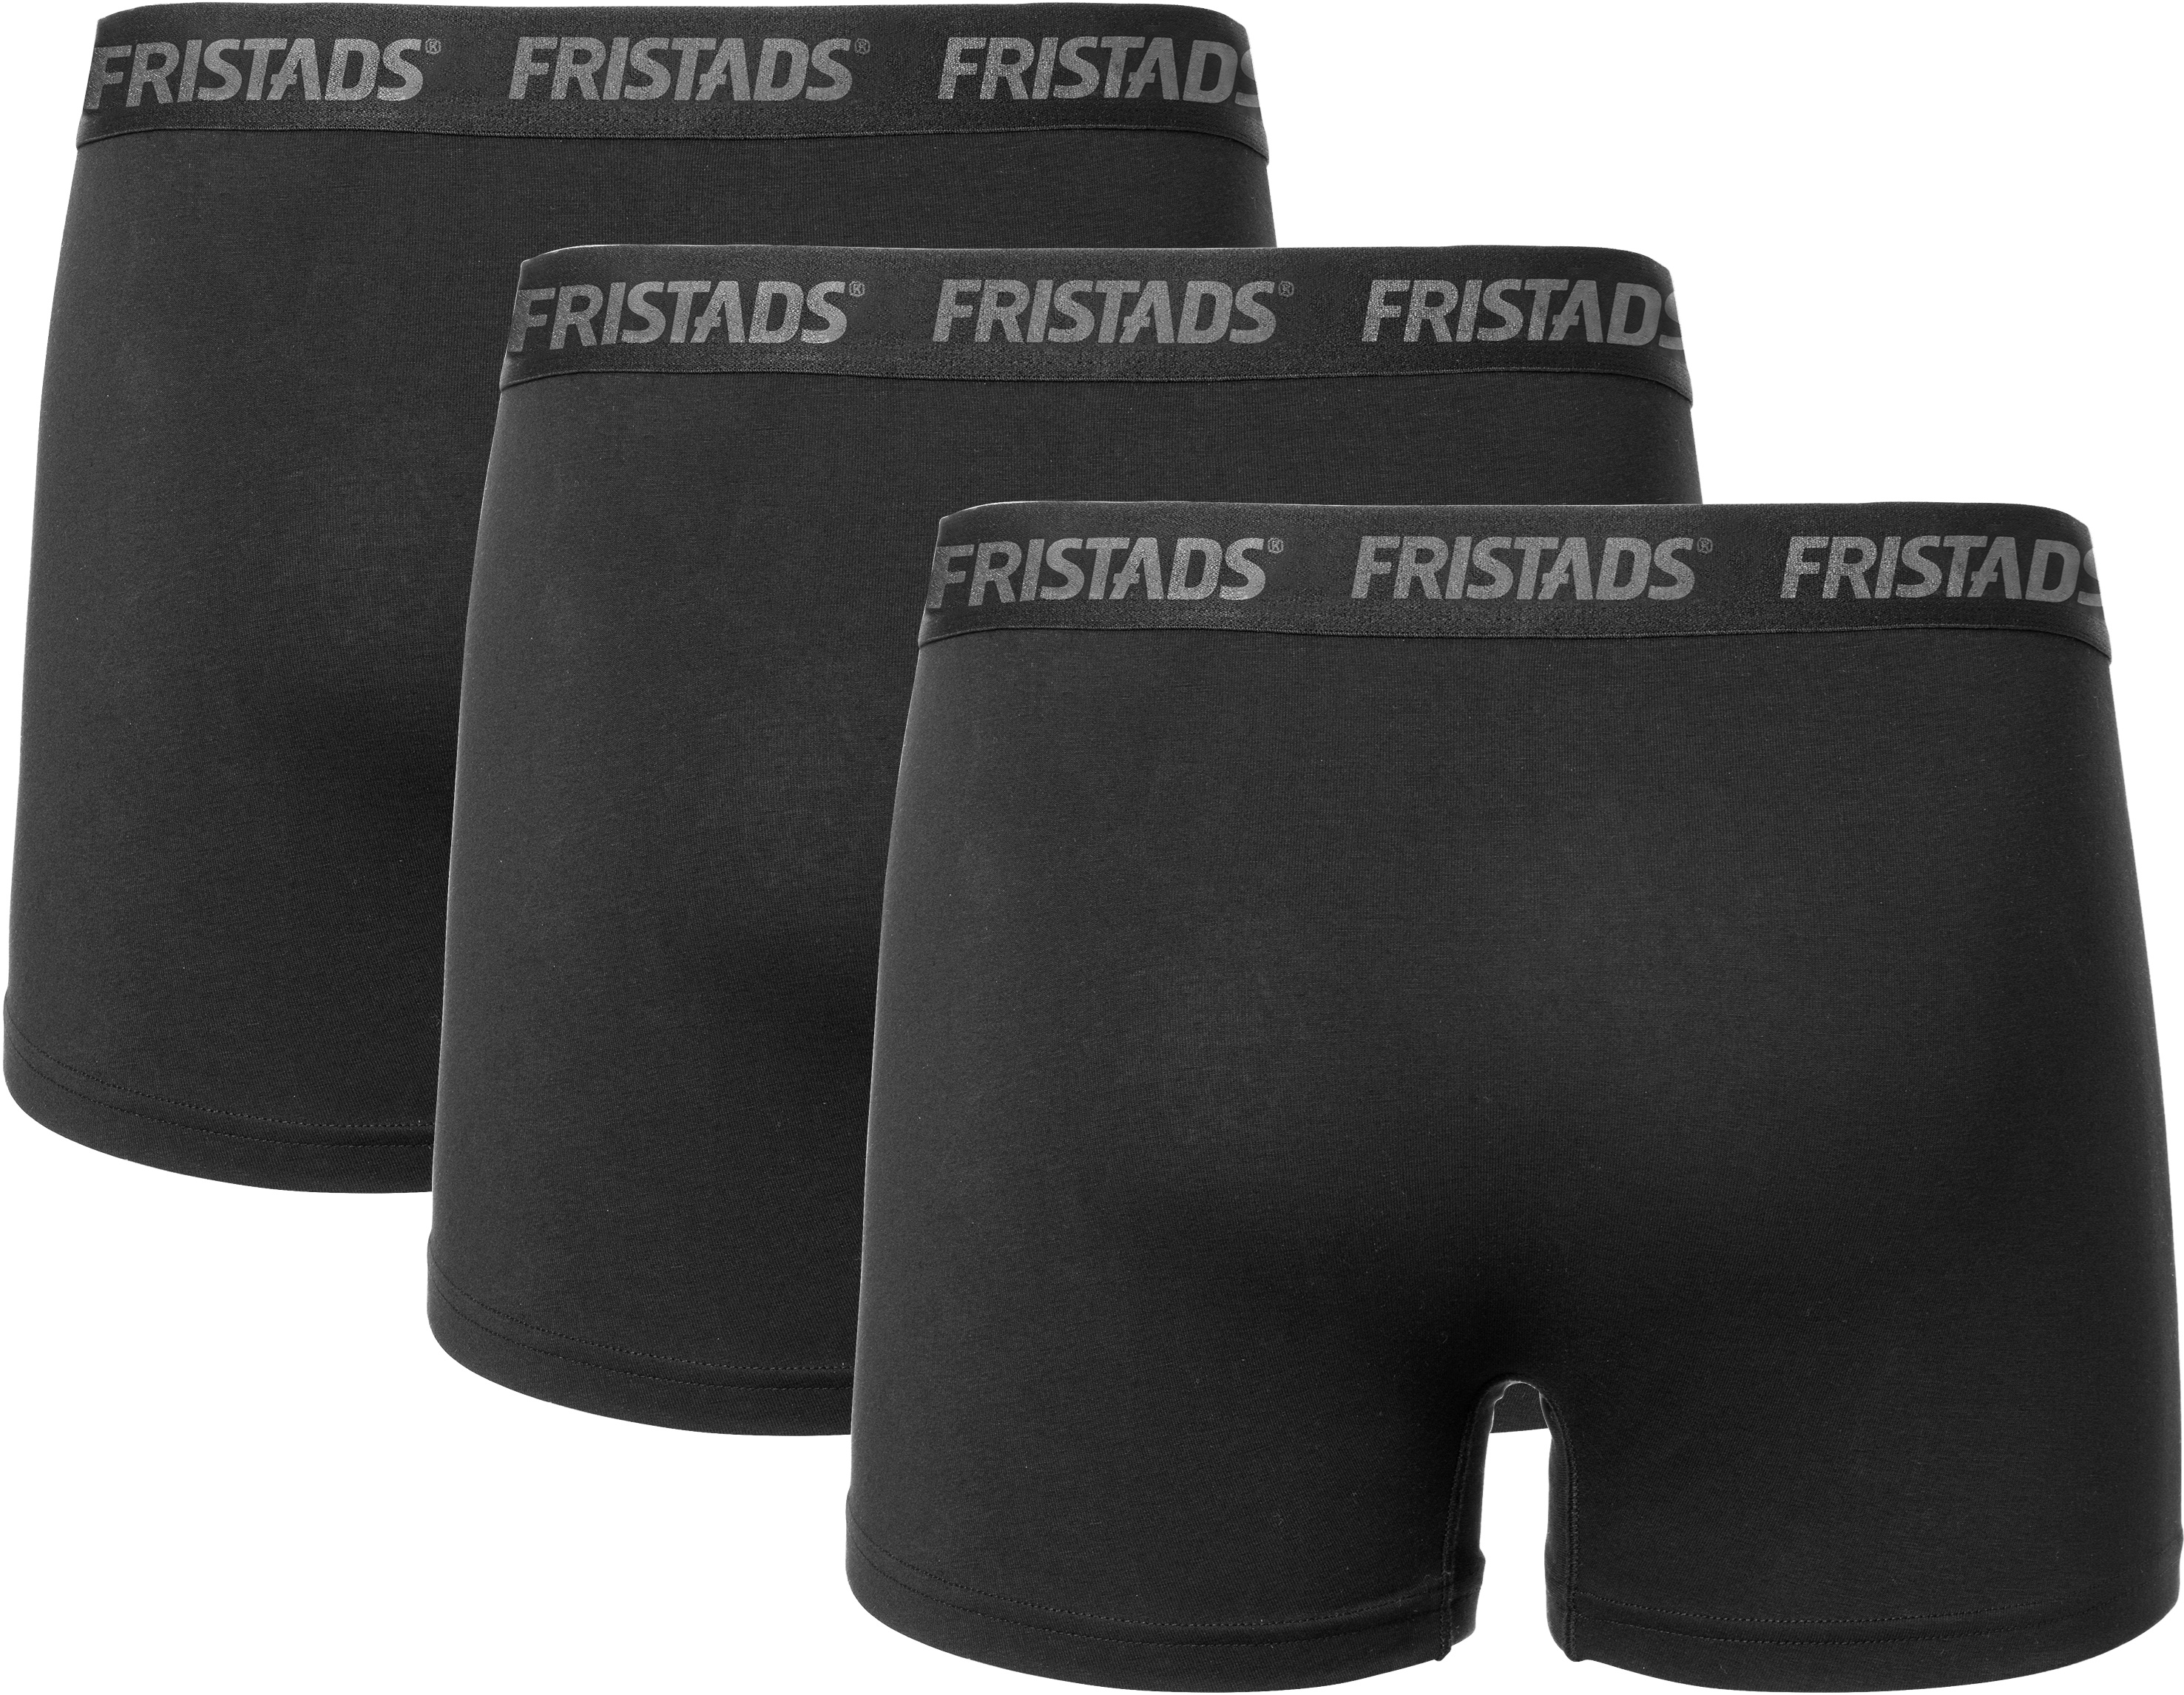 Fristads Boxershorts 3er-Pack 9329 BOX, Schwarz, 125034-940